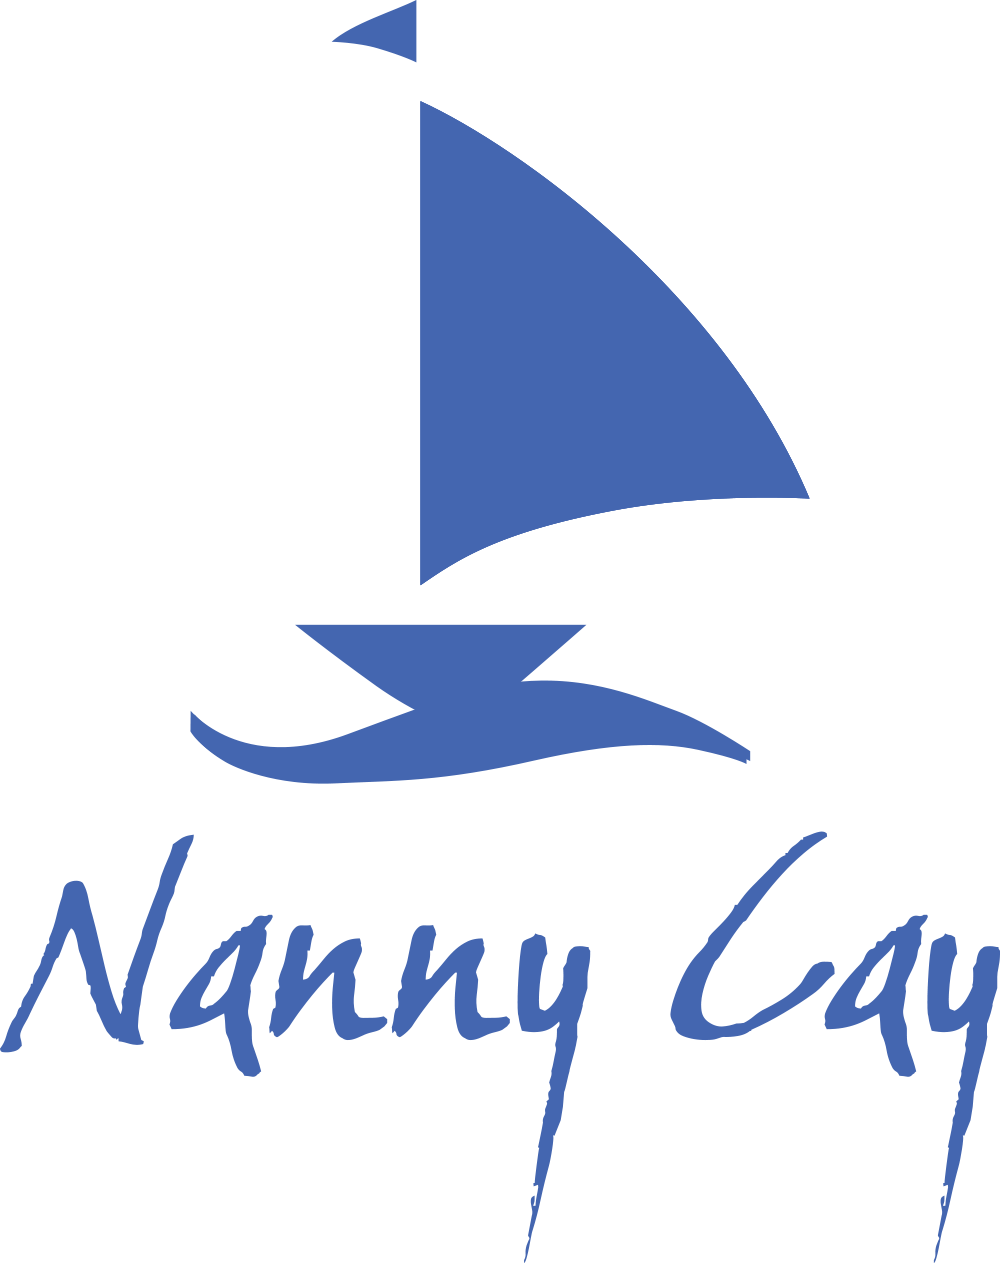 nanny-cay-vertical-logo-large